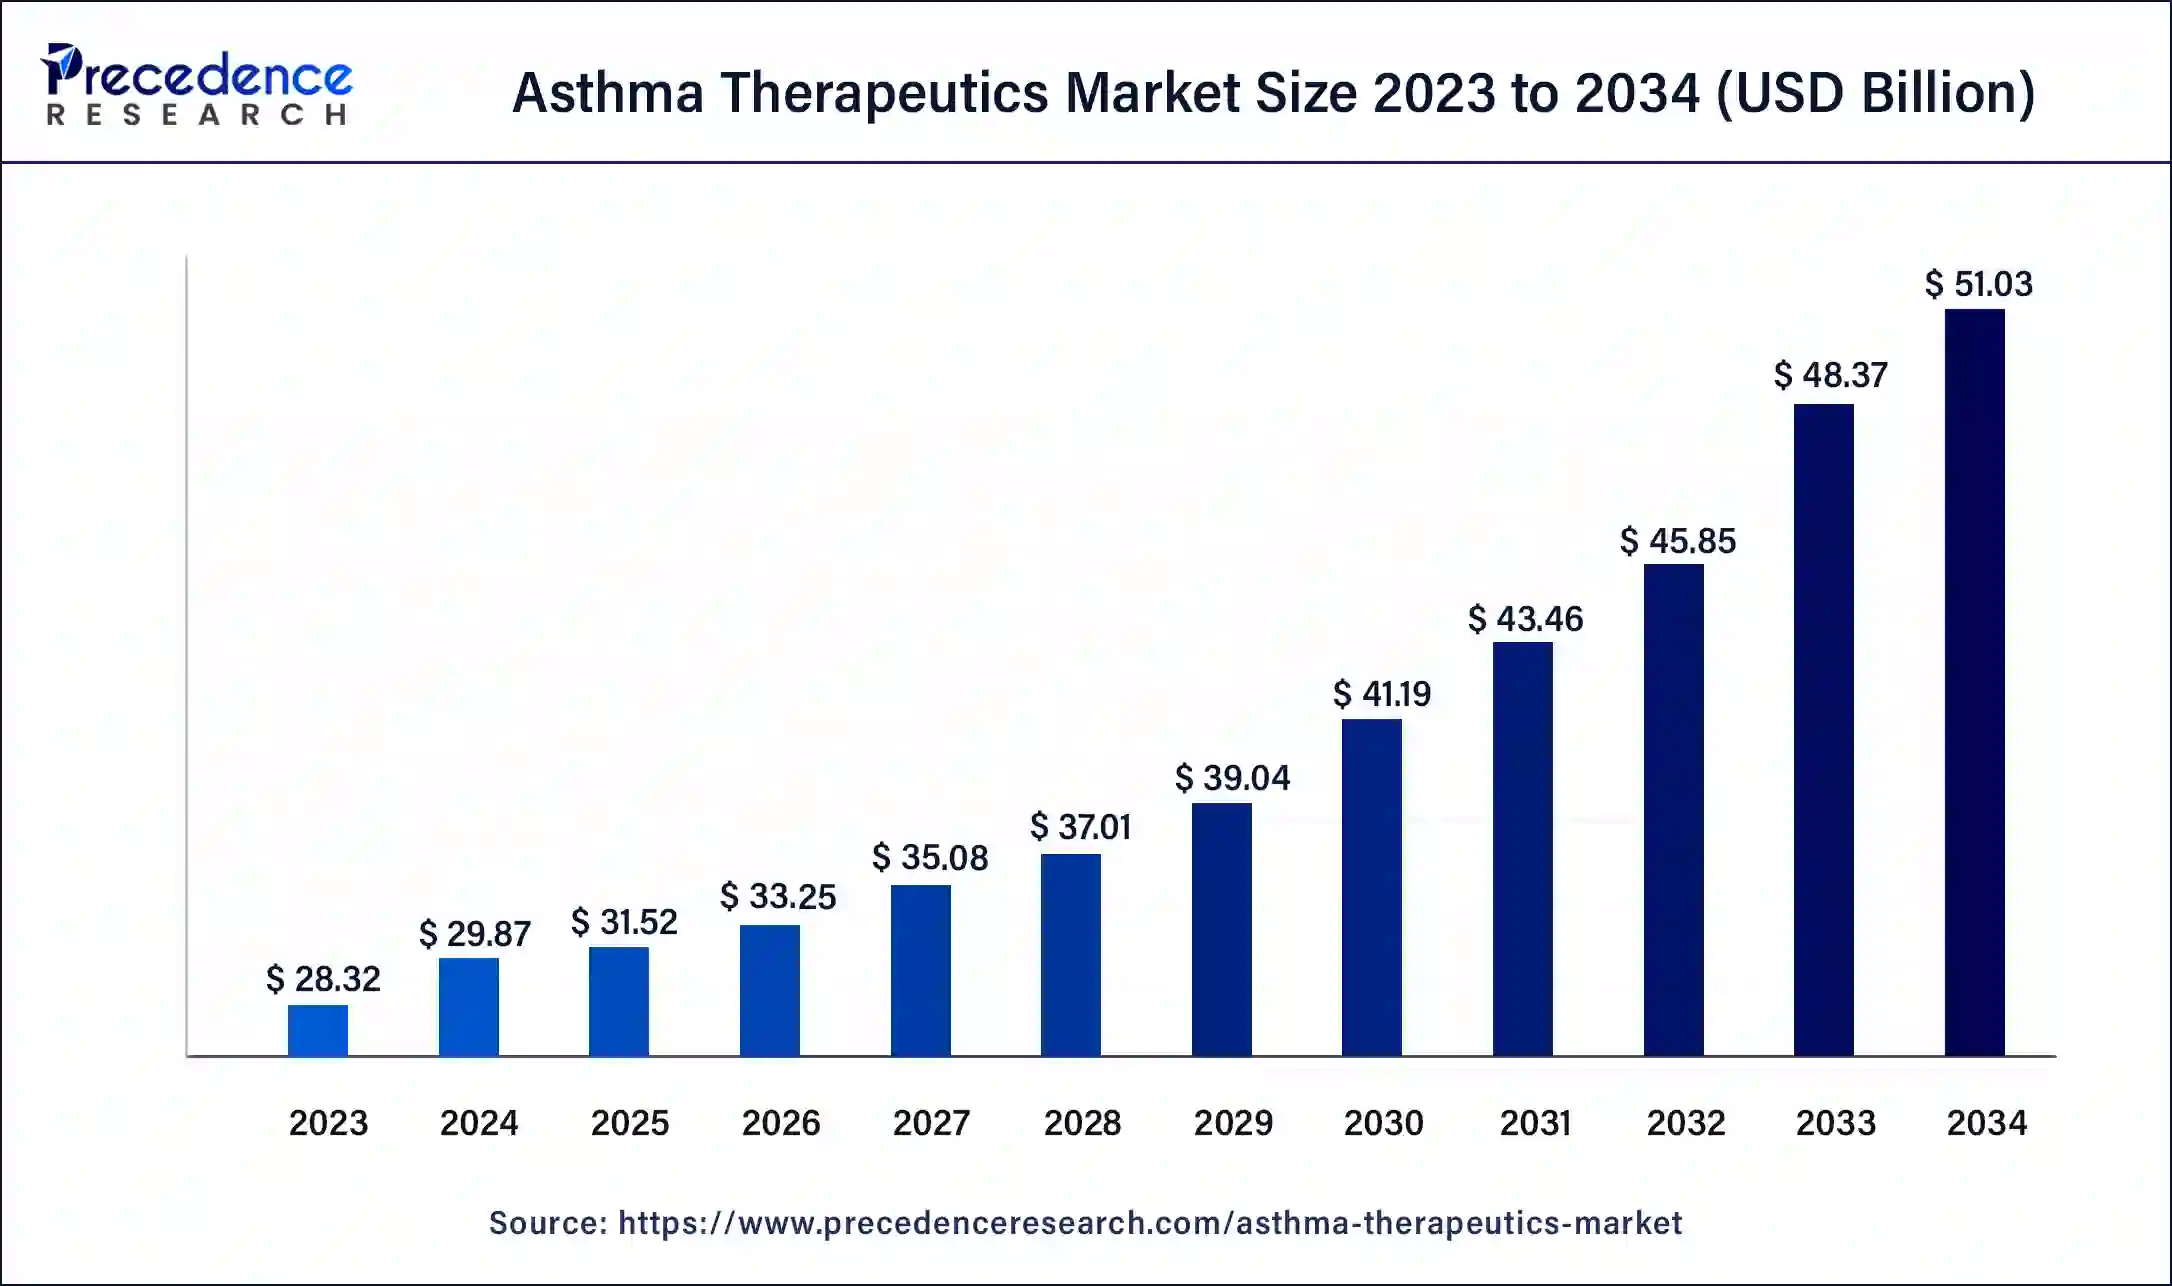 Asthma Therapeutics Market Size 2024 to 2034